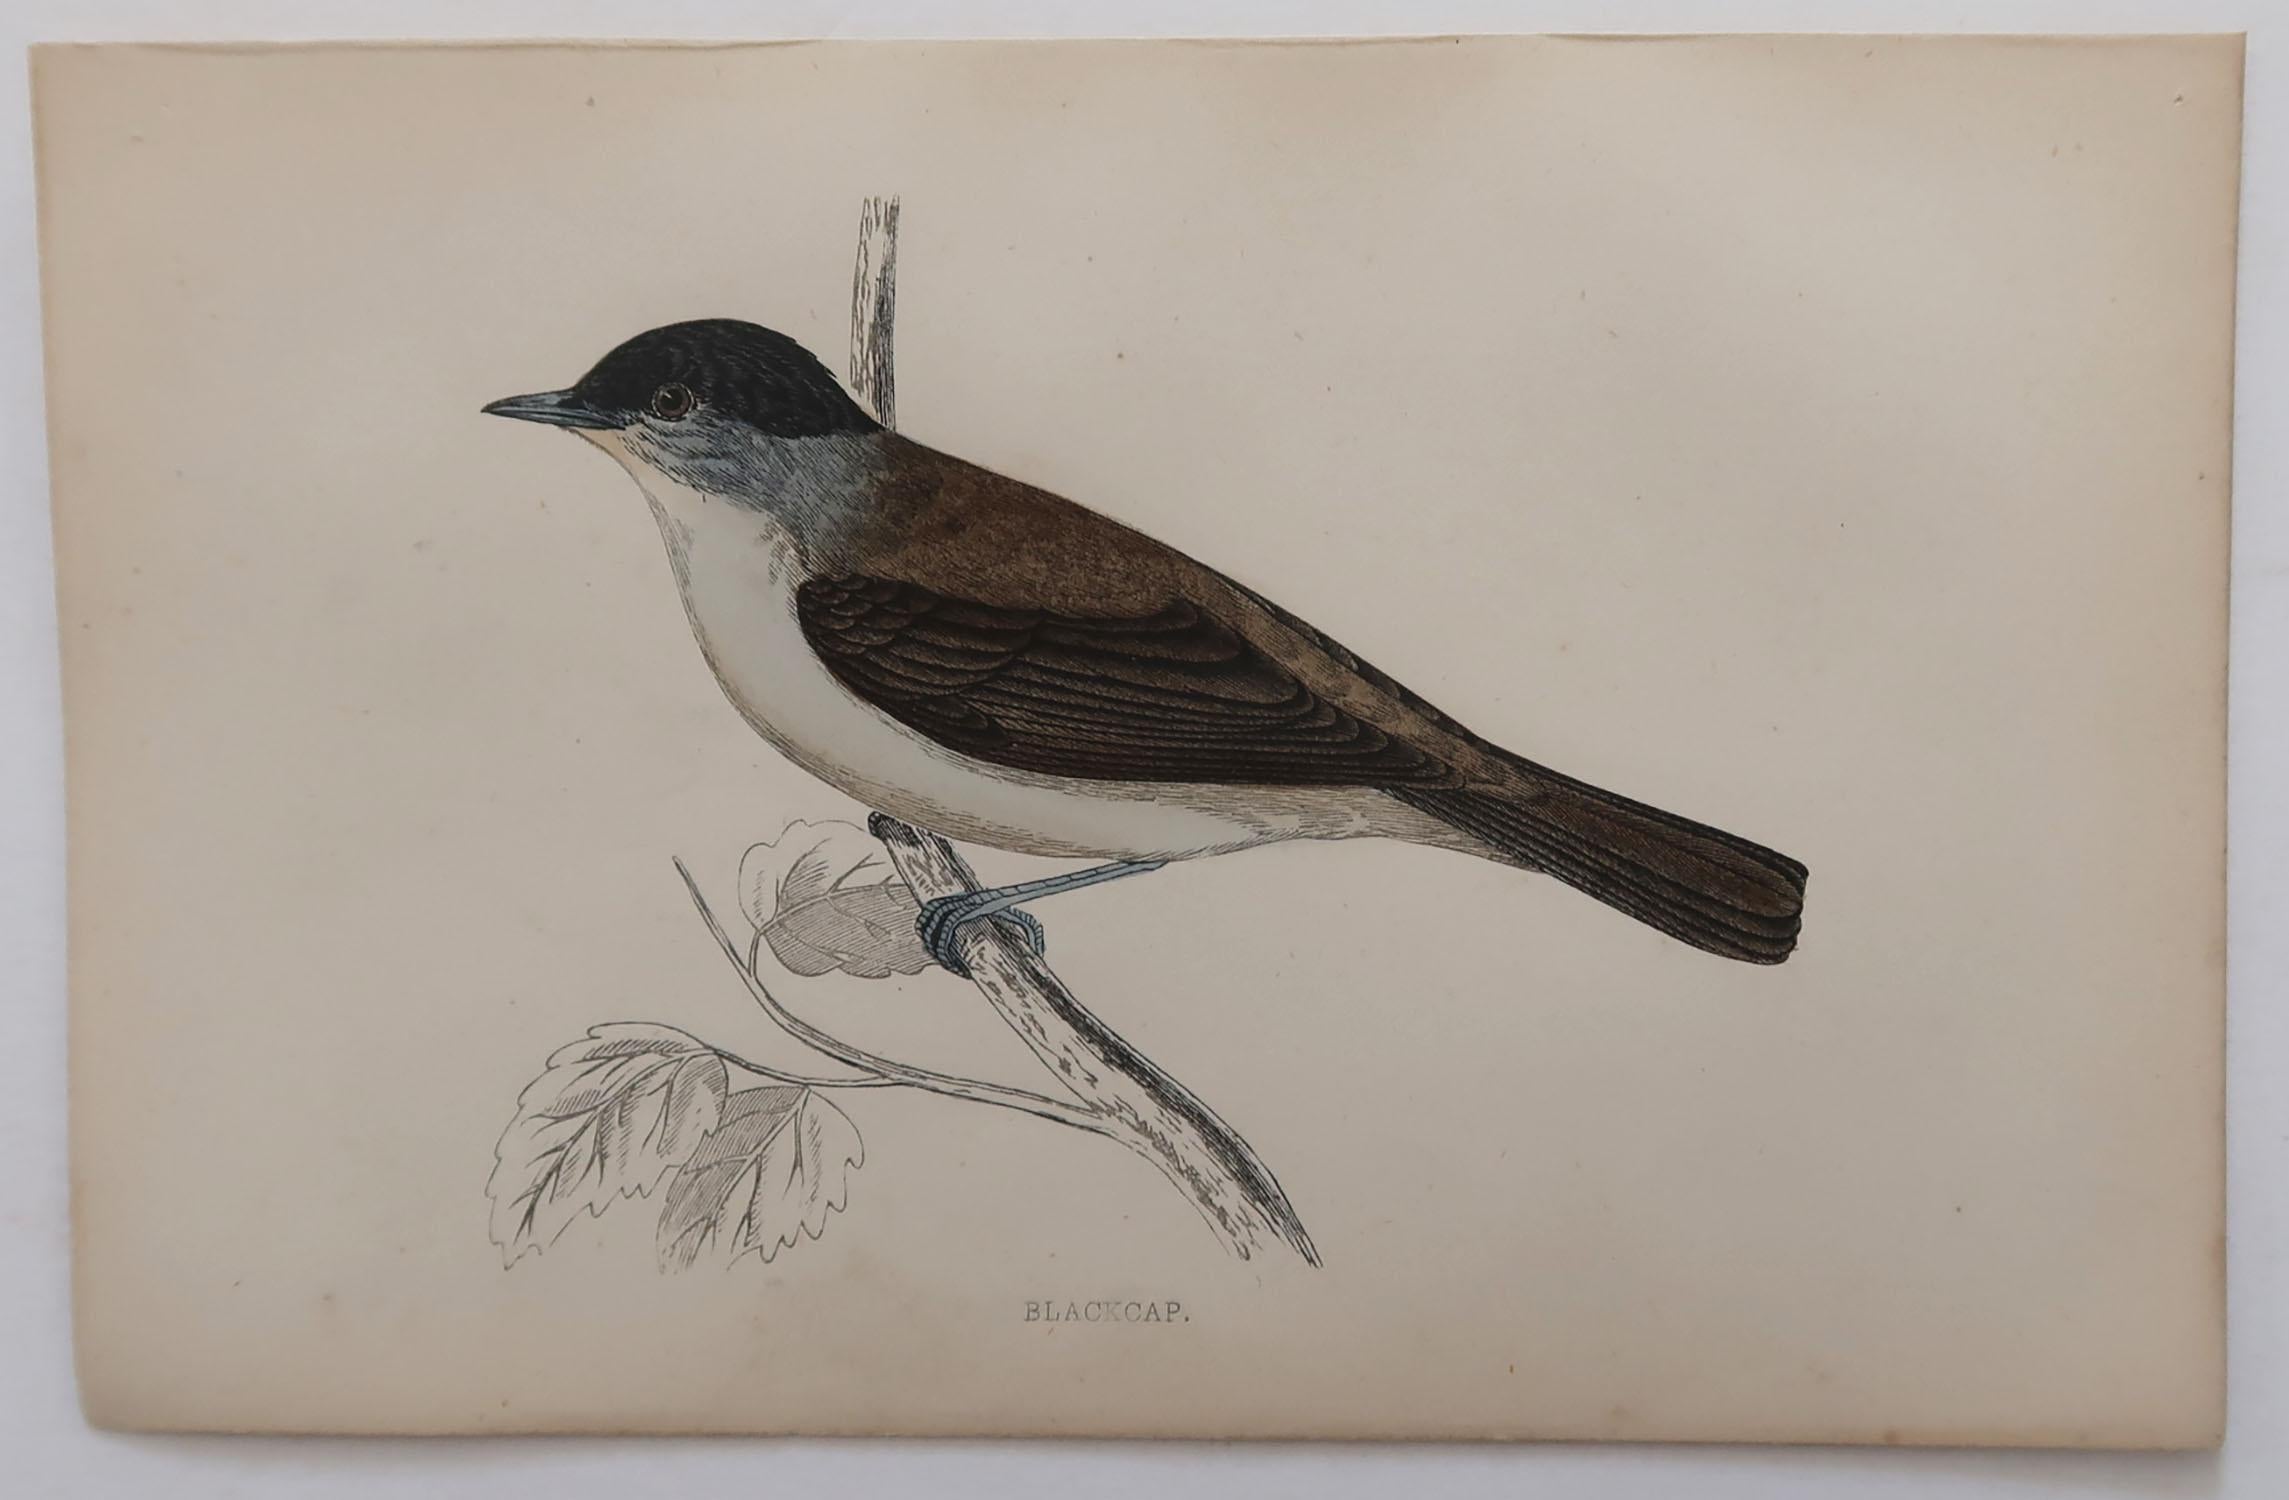 Folk Art Original Antique Bird Print, the Blackcap, circa 1870